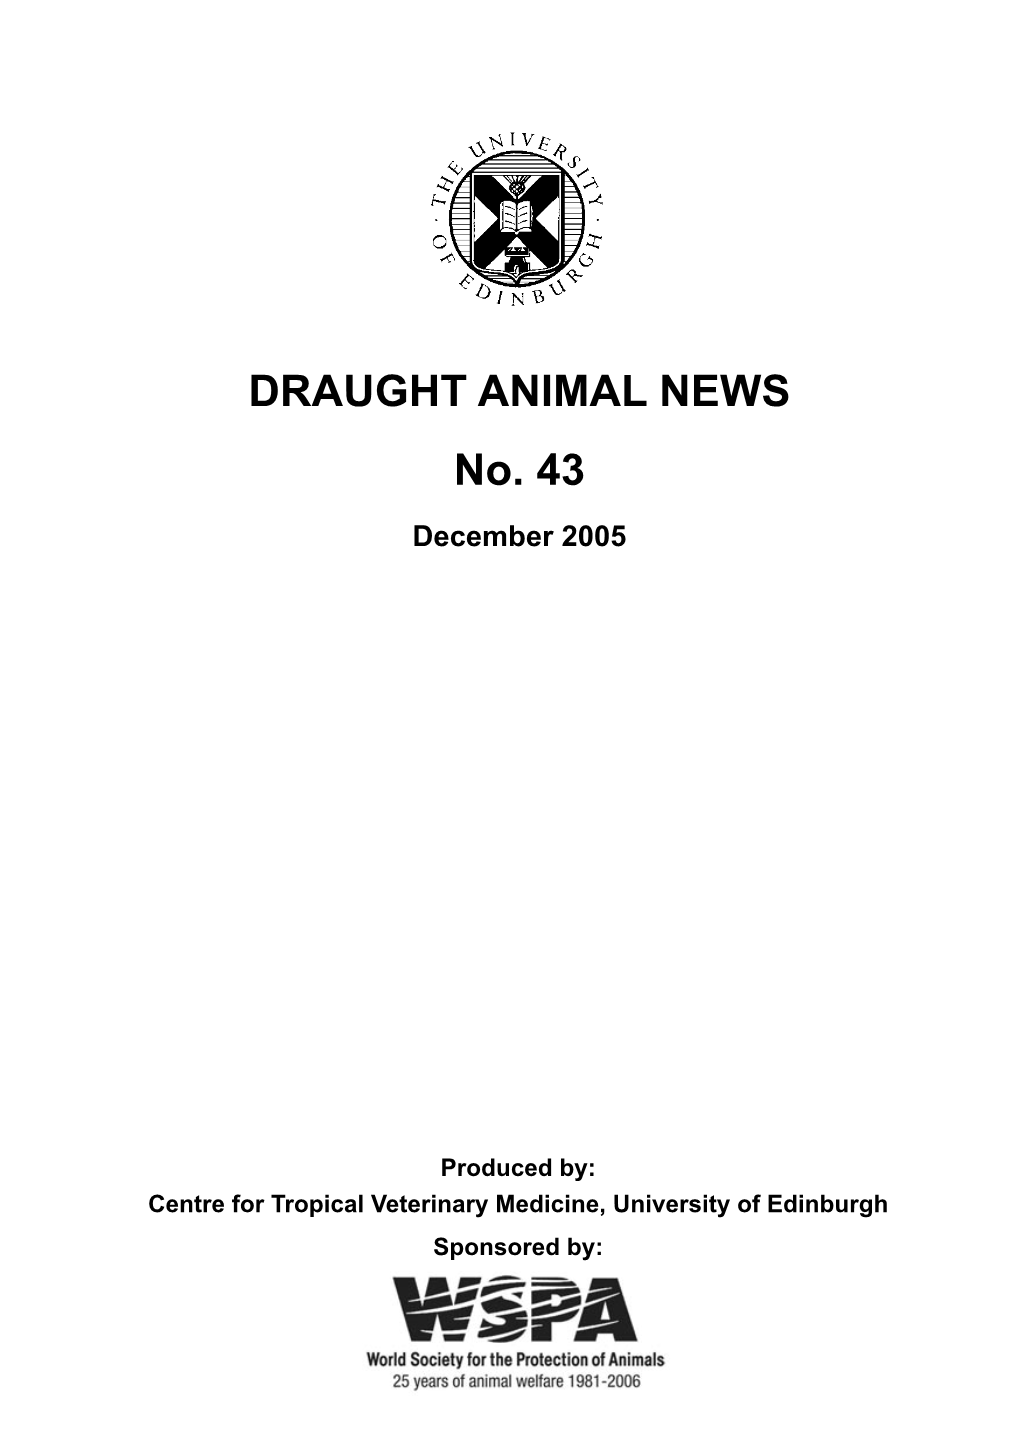 DRAUGHT ANIMAL NEWS No. 43 December 2005